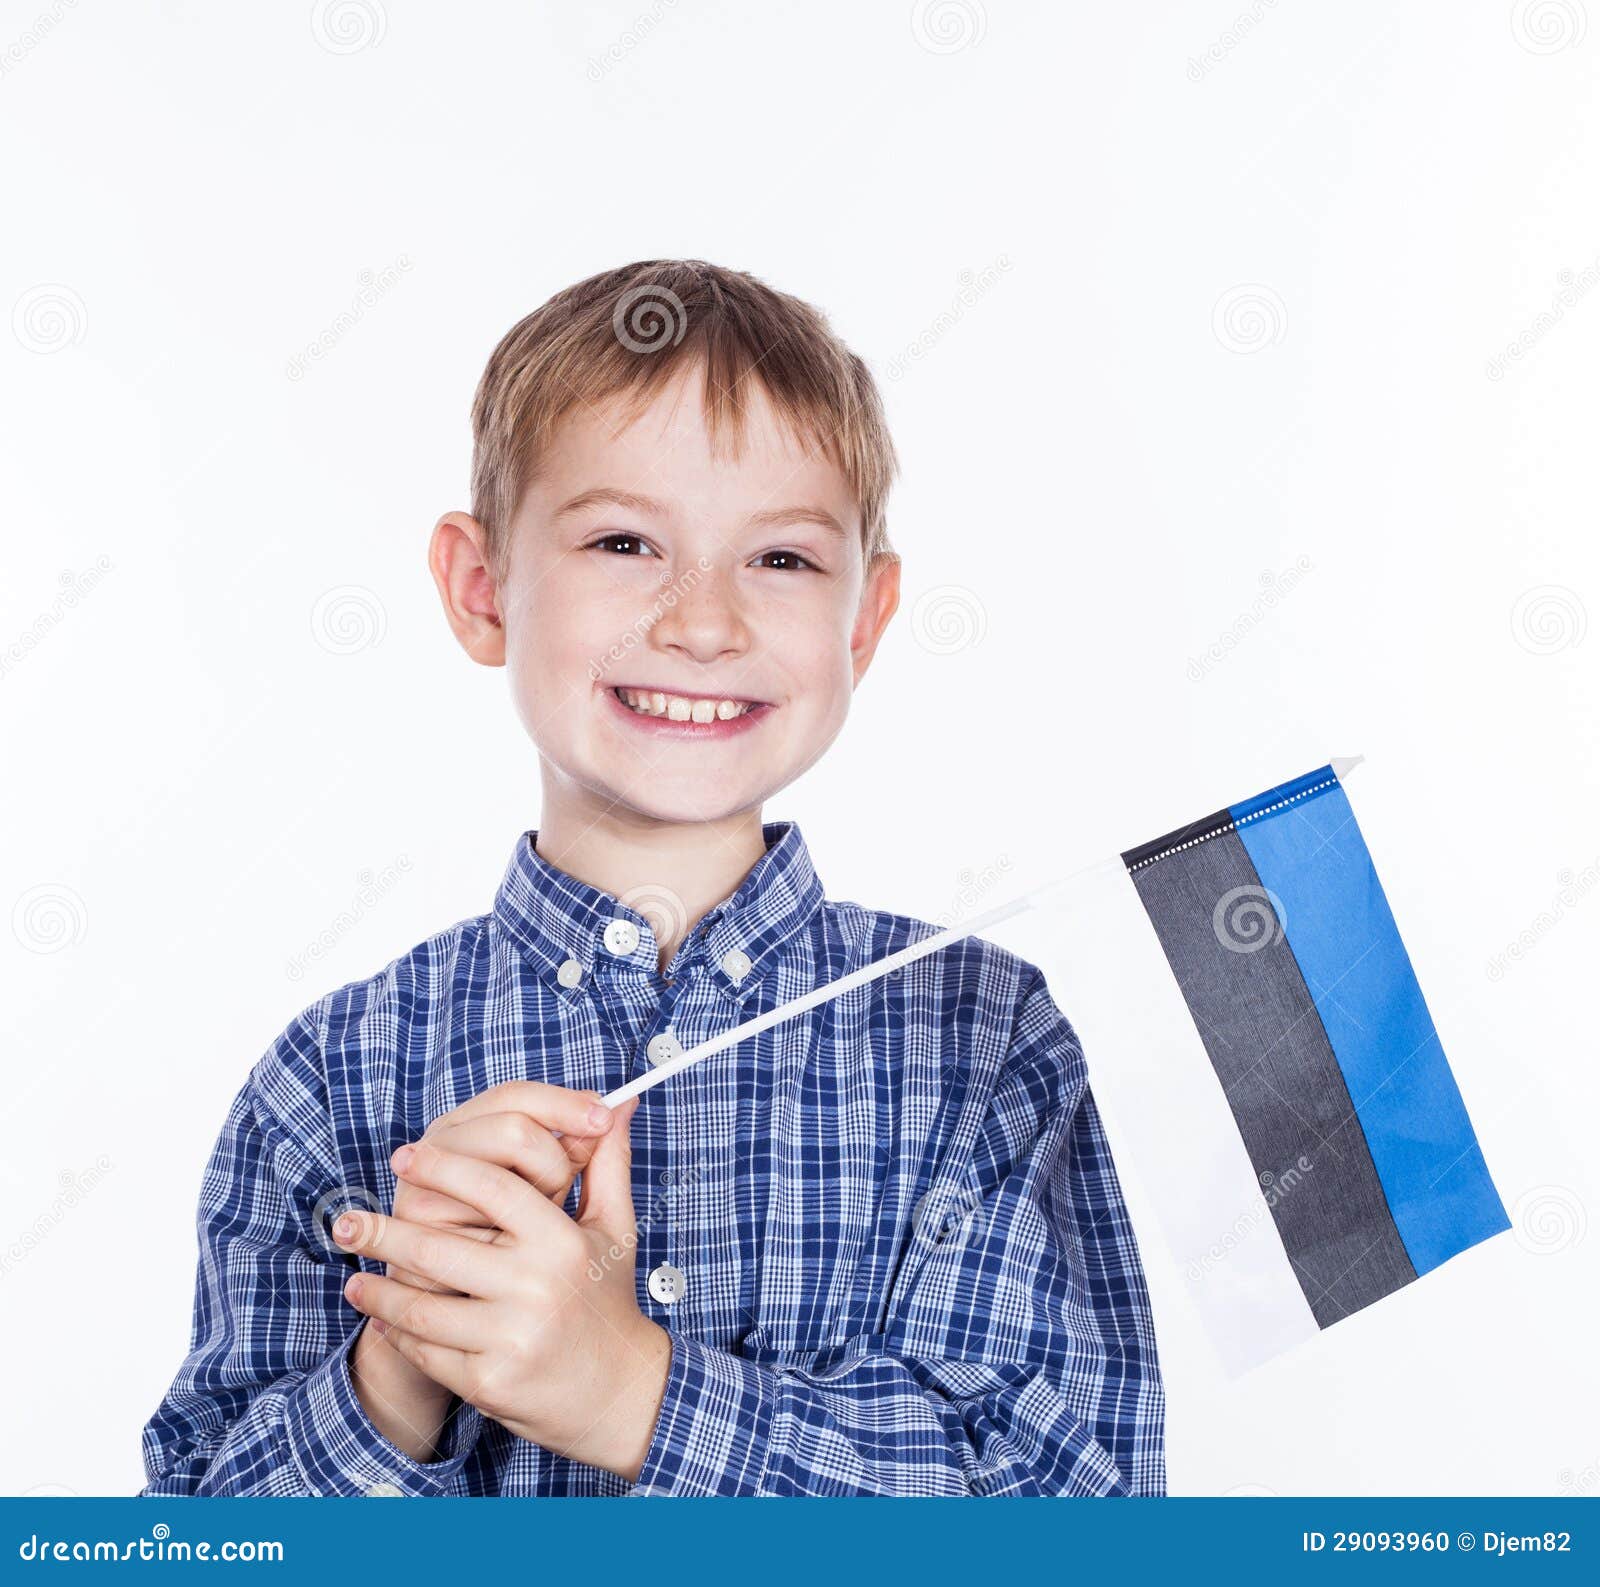 a little boy with estonian flag